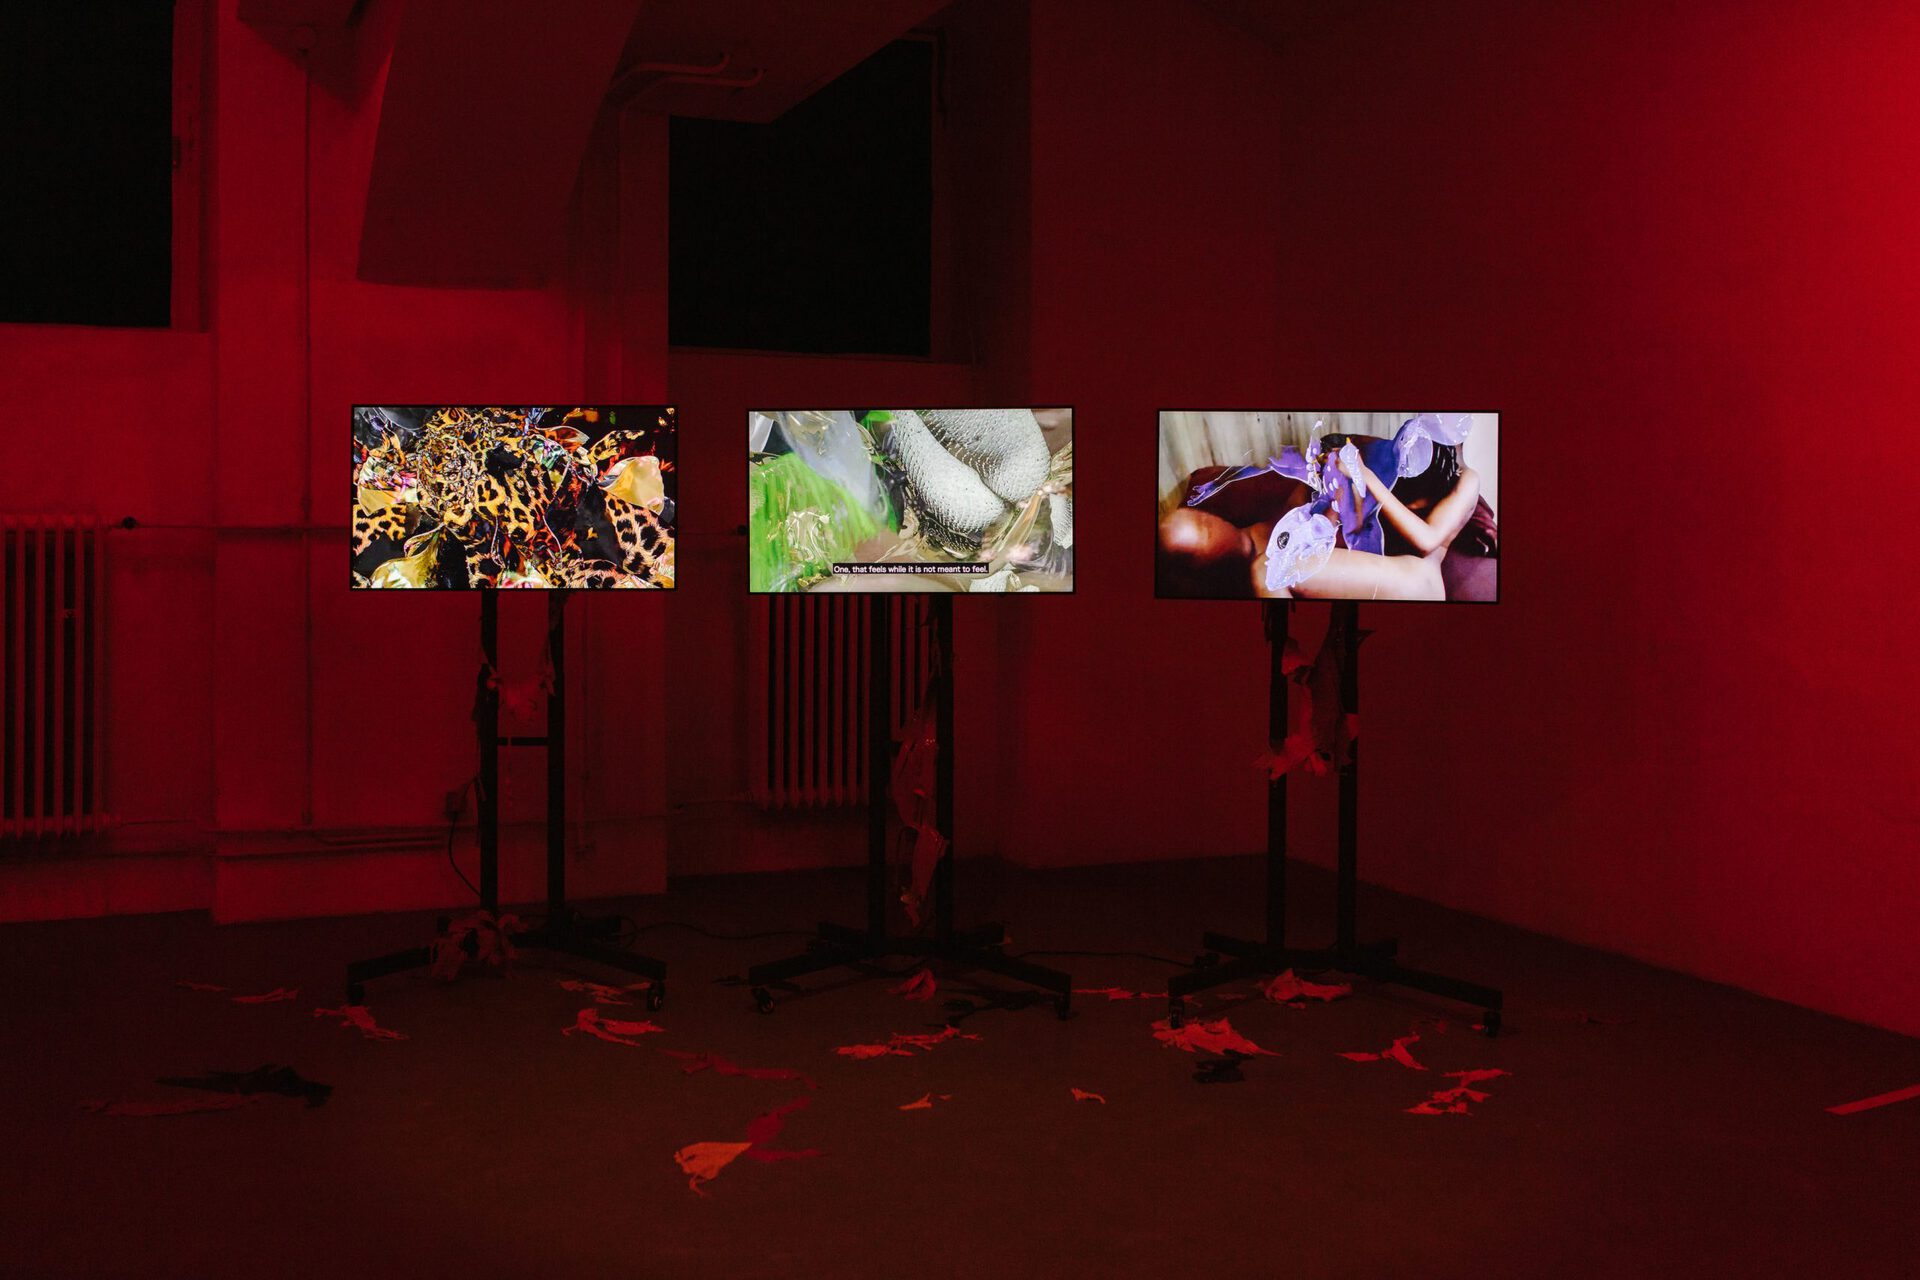 Johanna Bruckner, “Crushpad Climax”, 2021, HD/4K 3-channel-video installation, 12 min. + Johanna Bruckner, “Hypermorphisms”, 2021, Installation, variously-colored silicone [Photo: Theresa Wey]